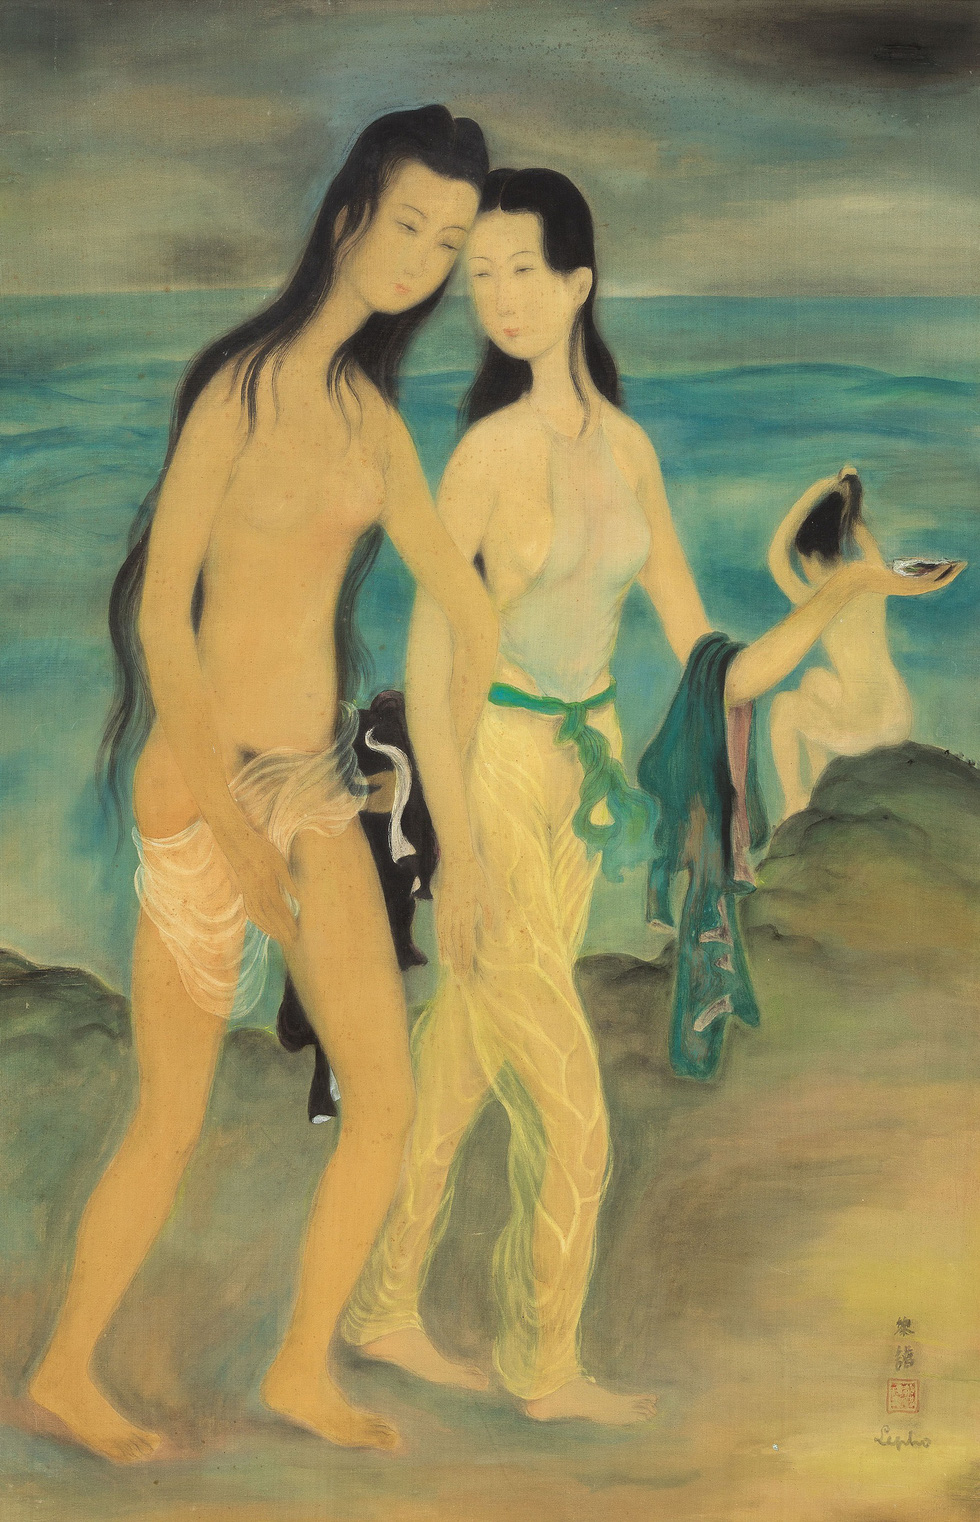 The painting Le Bain de Mer by late Vietnamese artist Le Pho